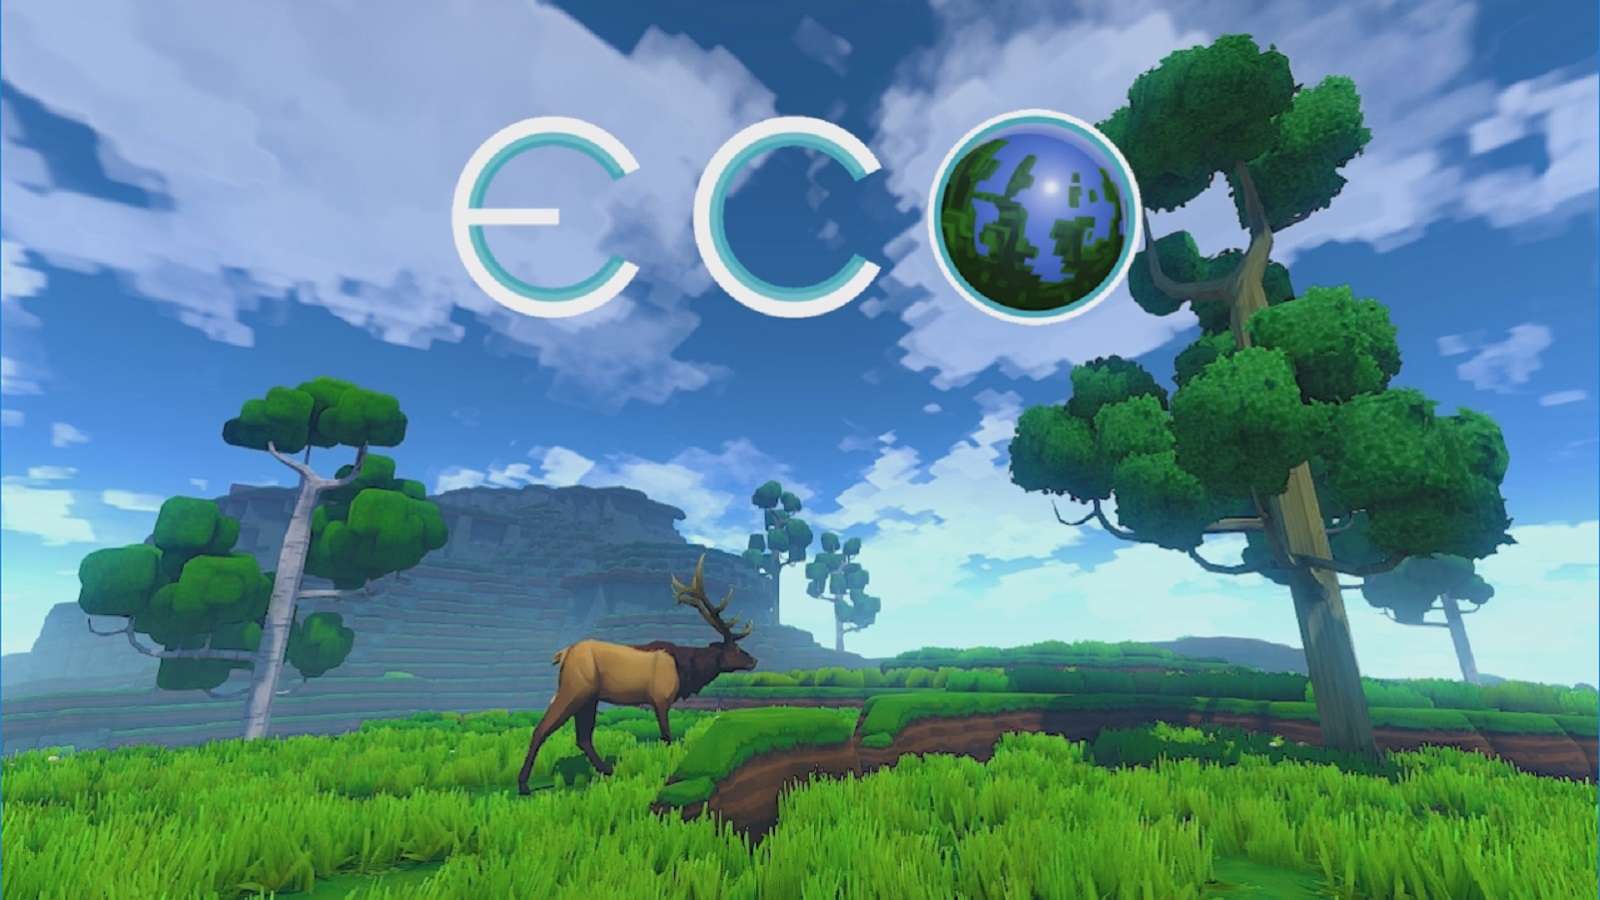 Игра спасти планету. Эко игра. ЕСО игра. Eco игра логотип. Вика эко игра.